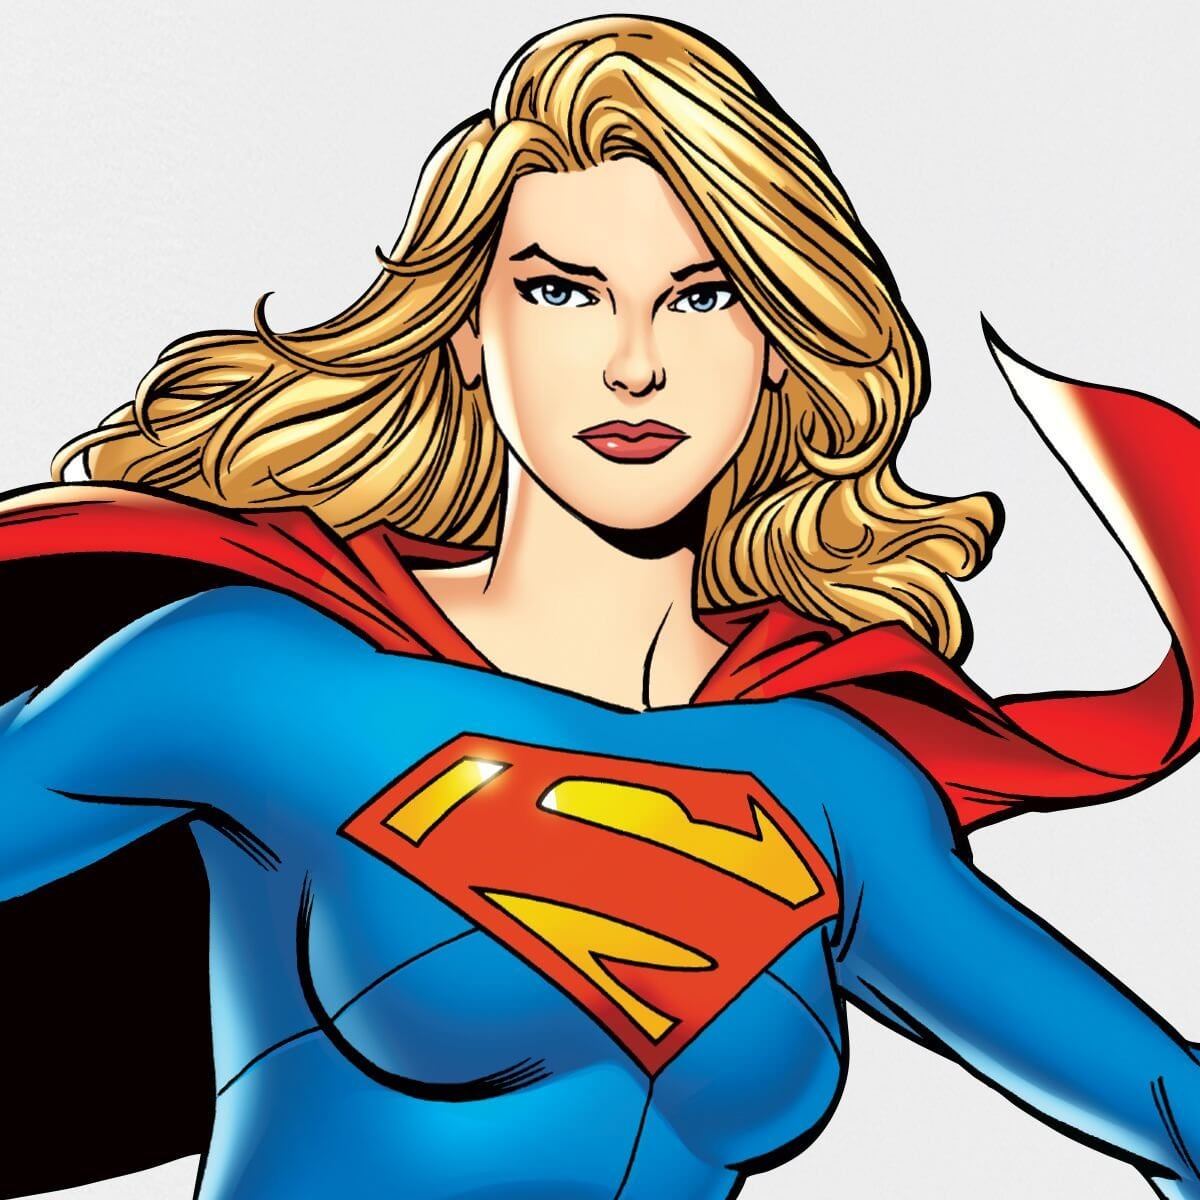 Kismet Decals Supergirl Take Flight Licensed Wall Sticker - Easy DIY Justice League Home & Room Decor Wall Art - Kismet Decals